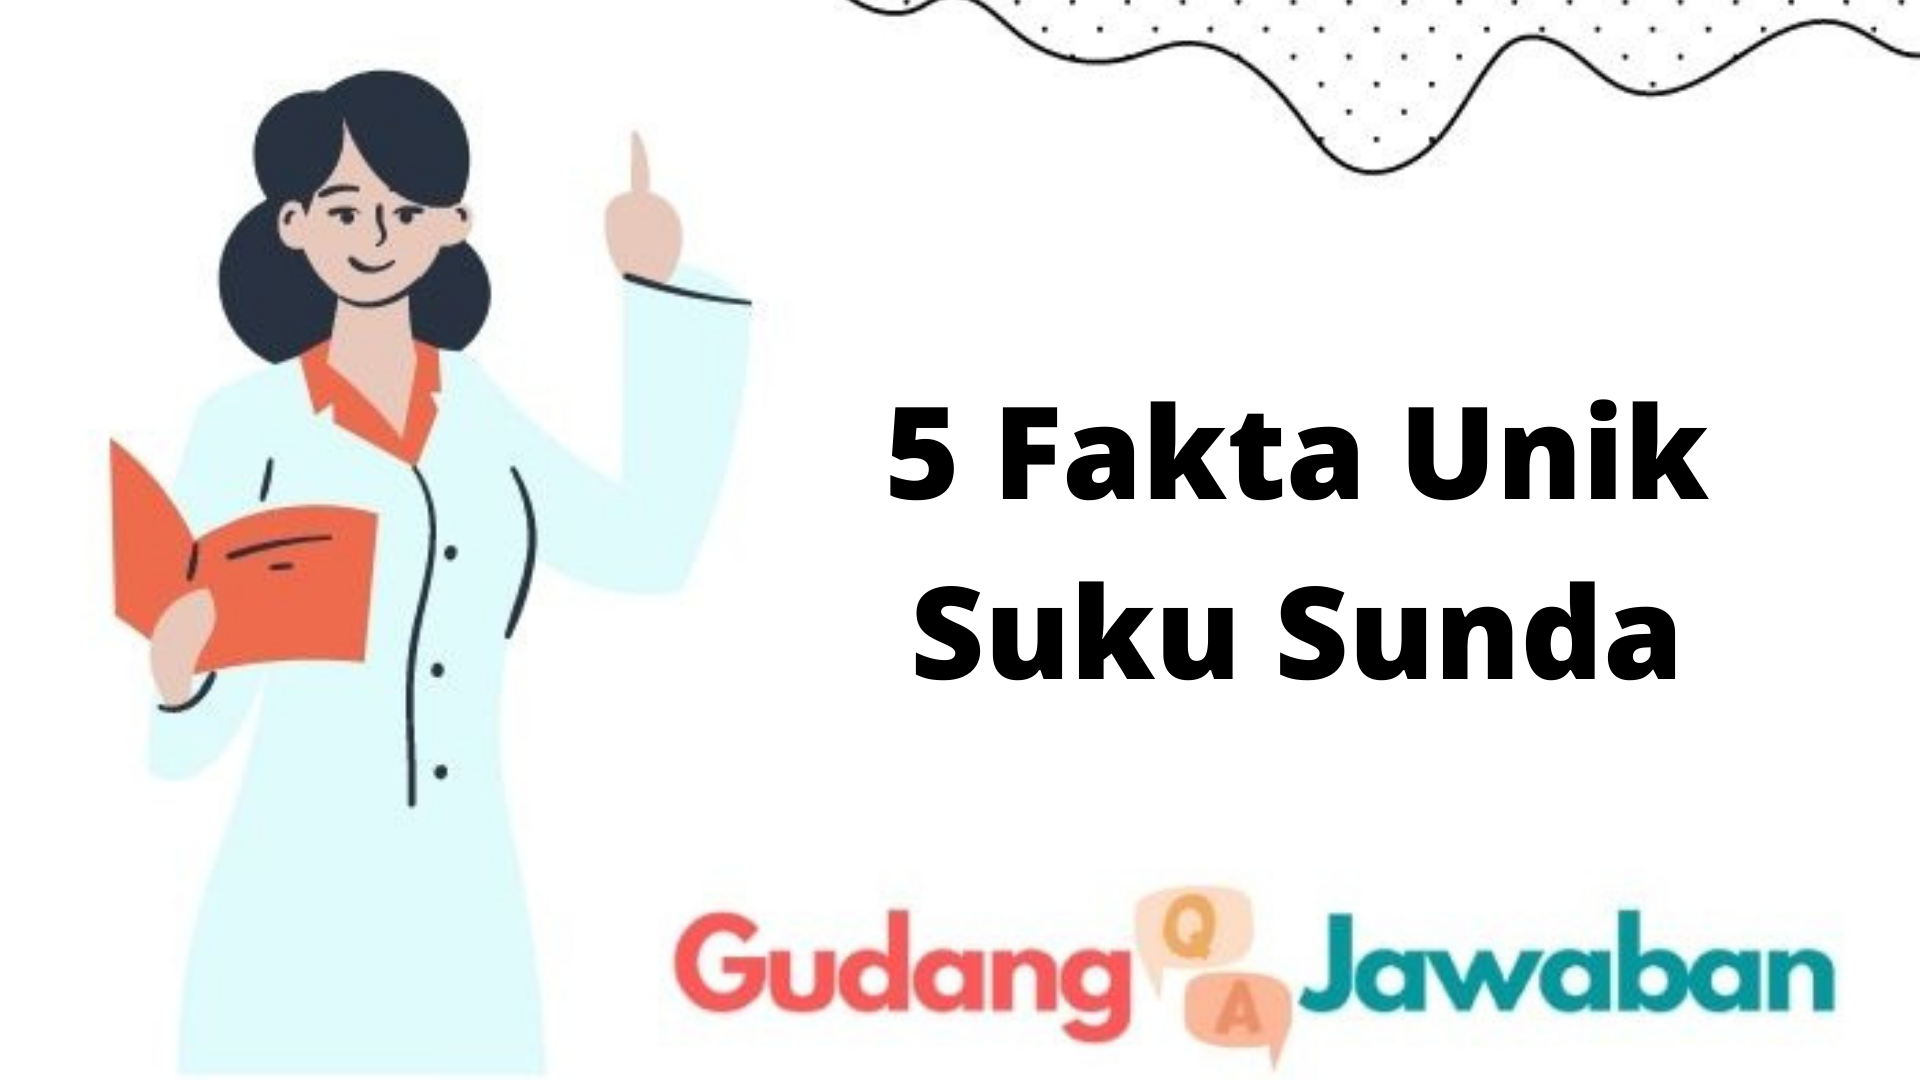 5 Fakta Unik Suku Sunda